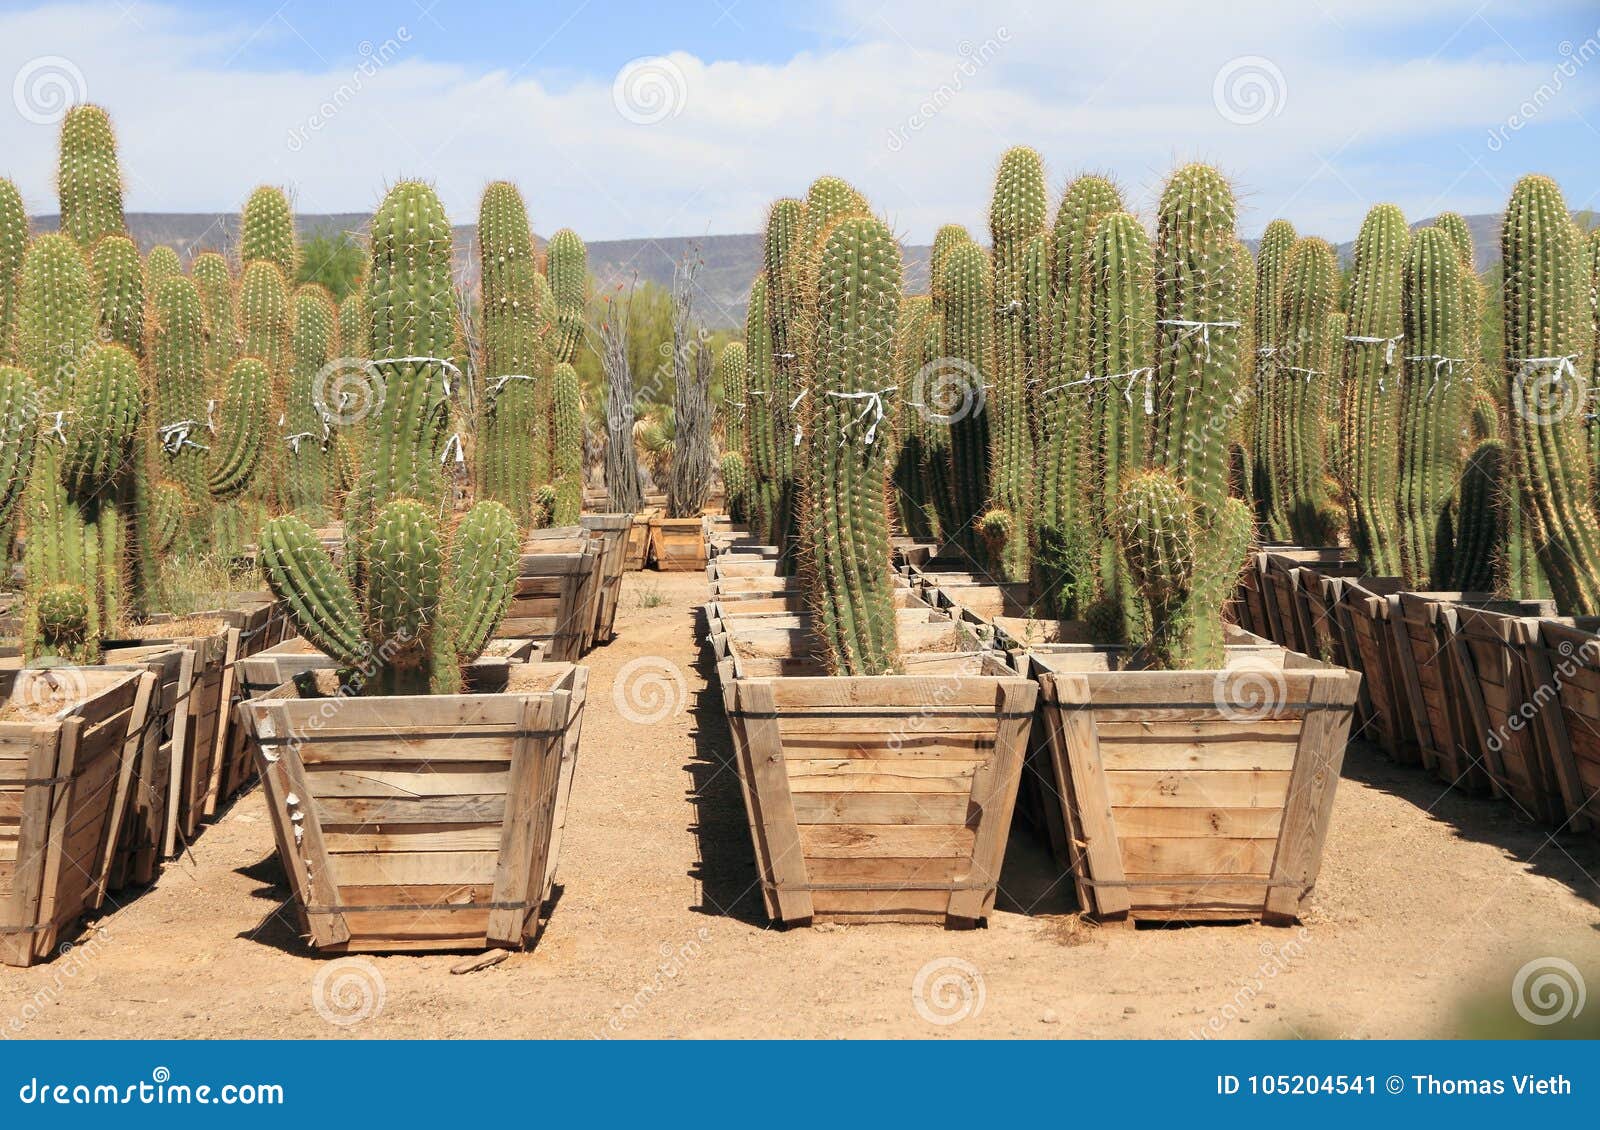 Phoenix, Arizona Desert Plant Nursery   Saguaro Cacti for Sale ...